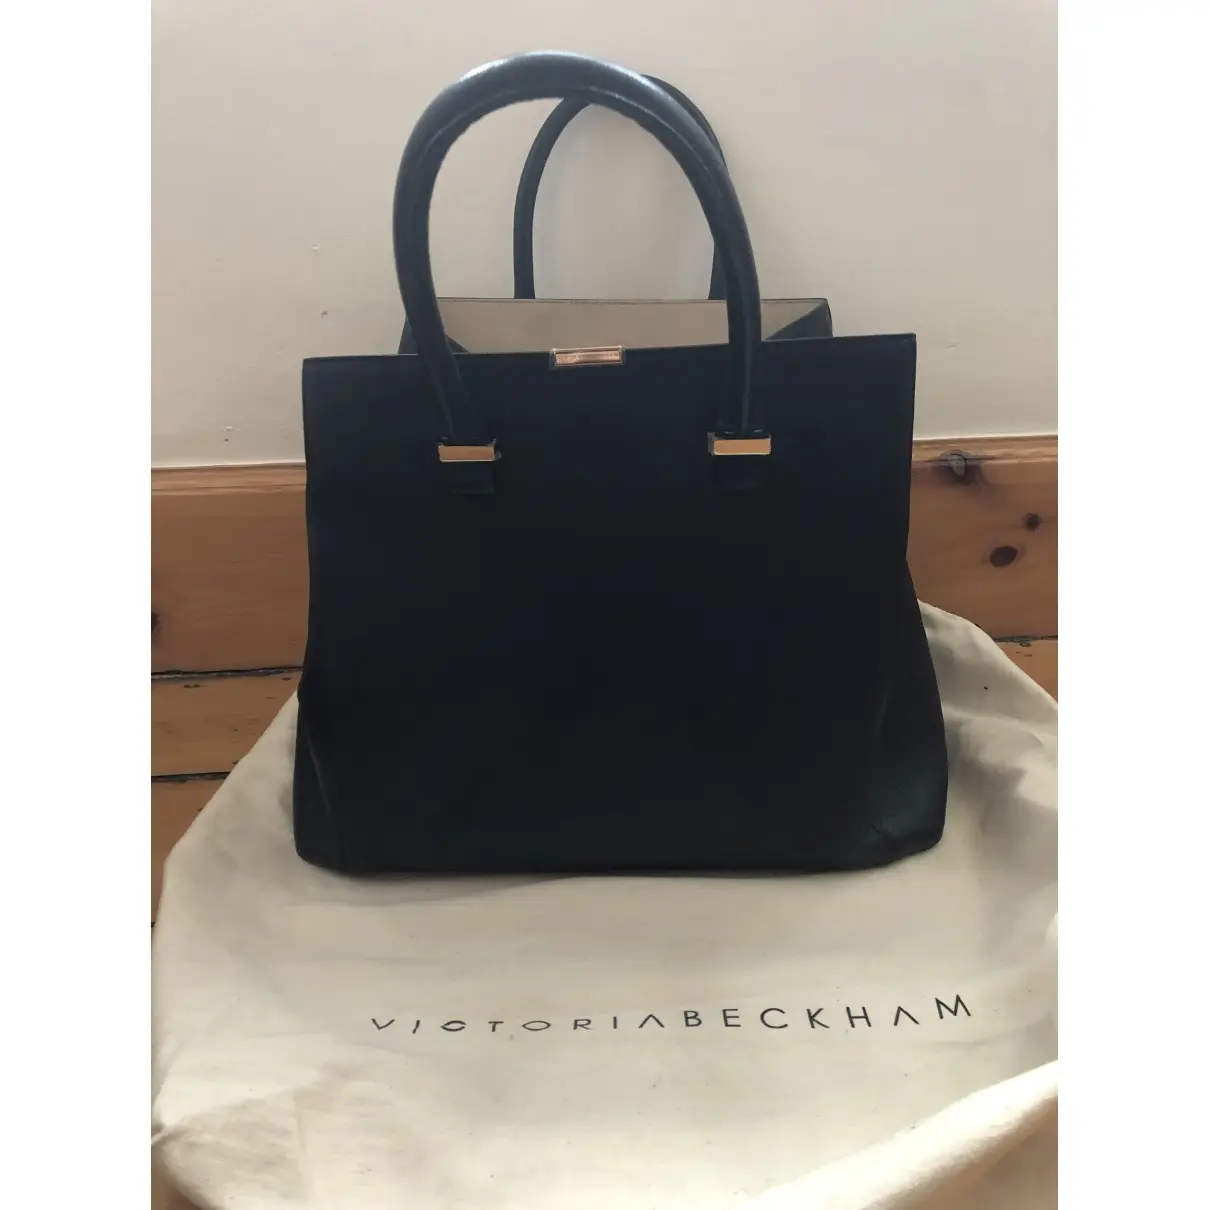 Buy Victoria Beckham Liberty leather handbag online